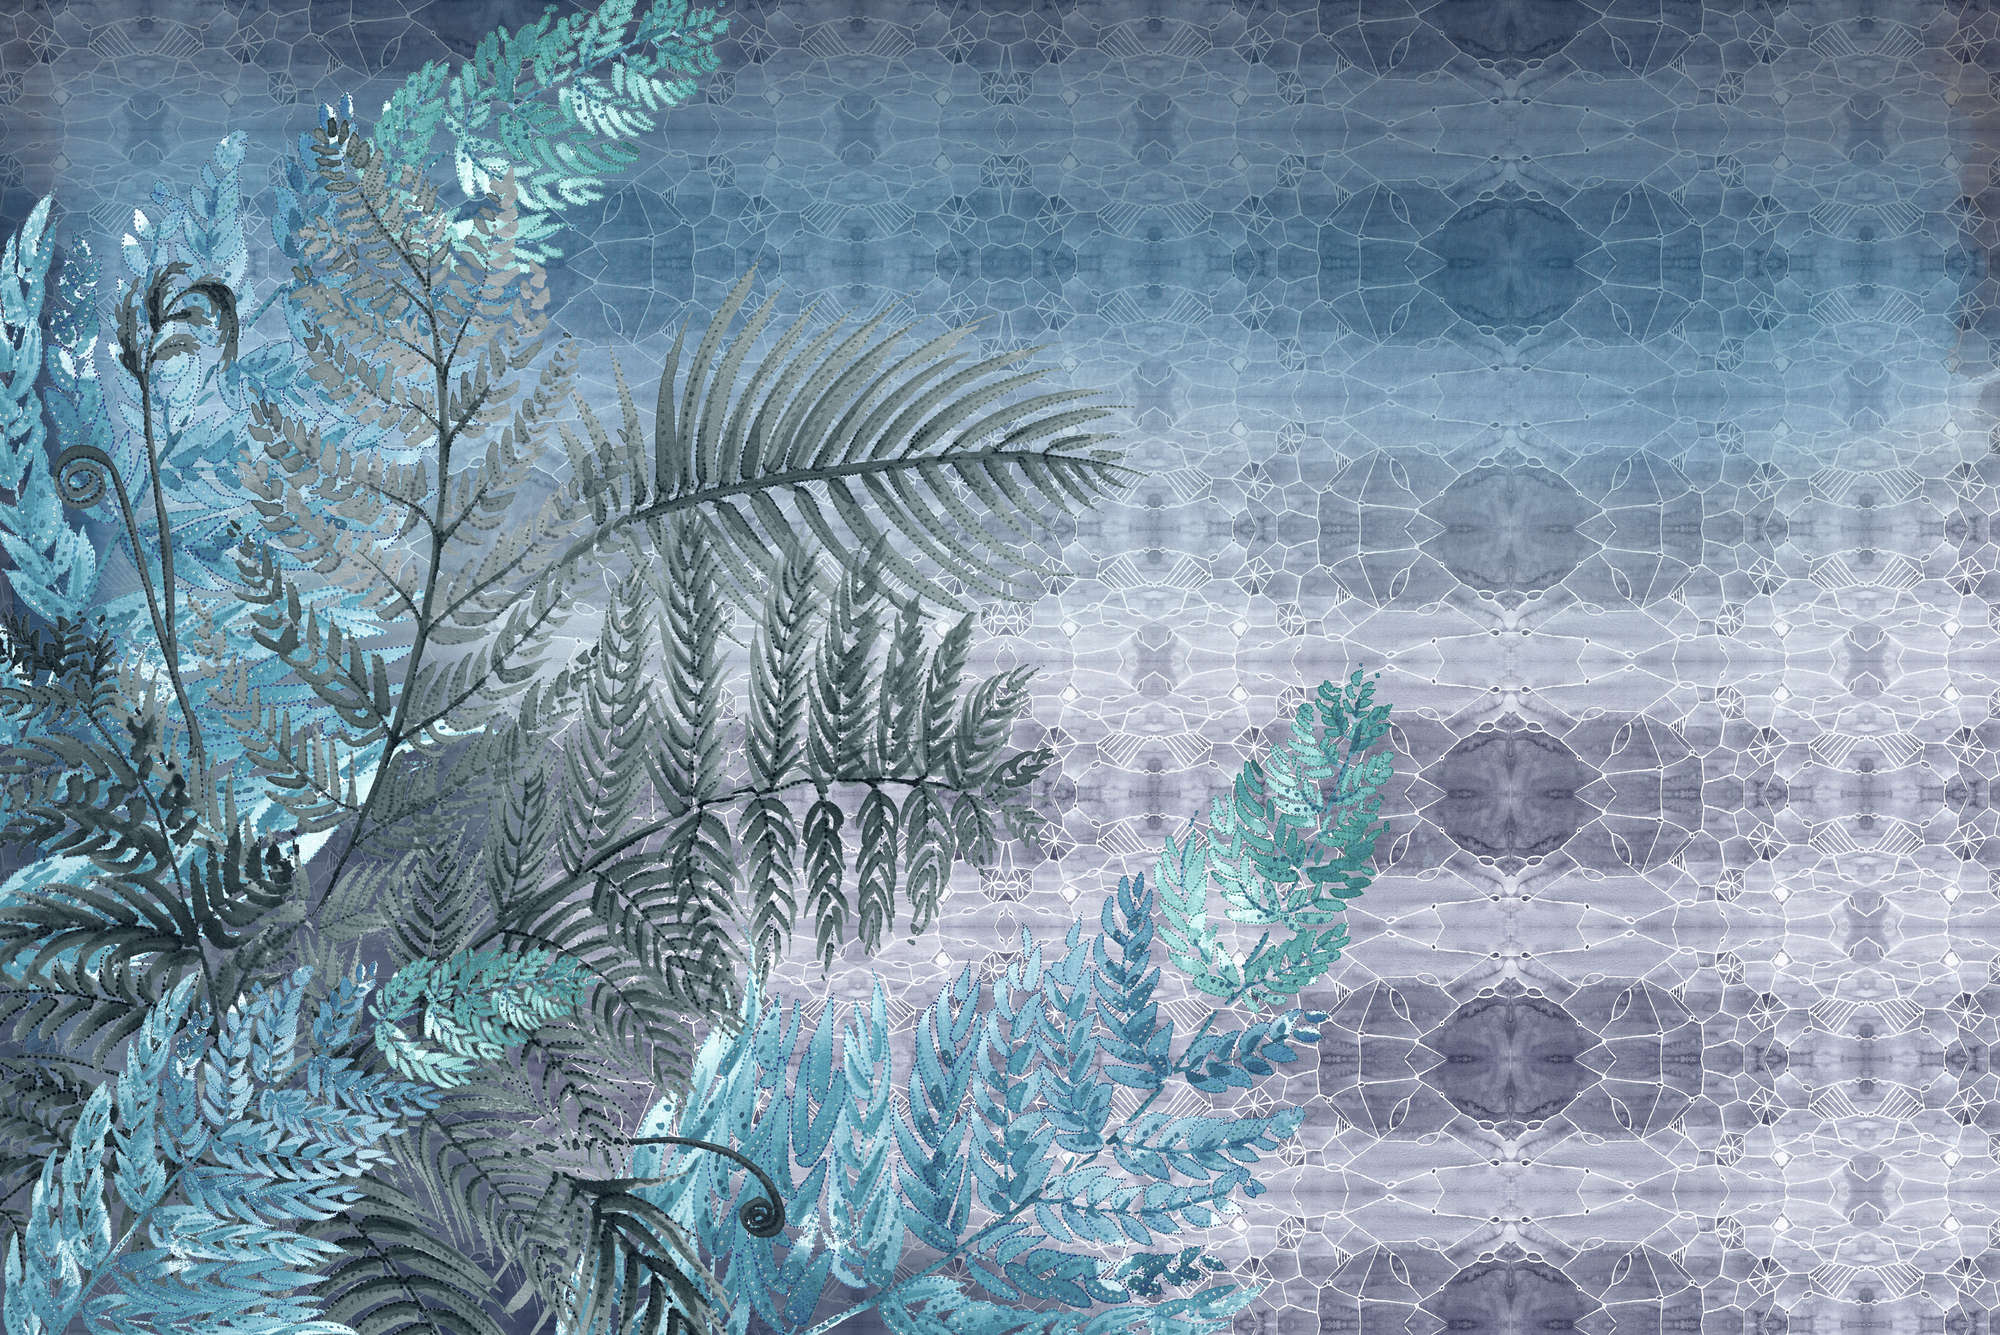             Aquarell Fototapete Farn-Muster in Blau und Violett auf Premium Glattvlies
        